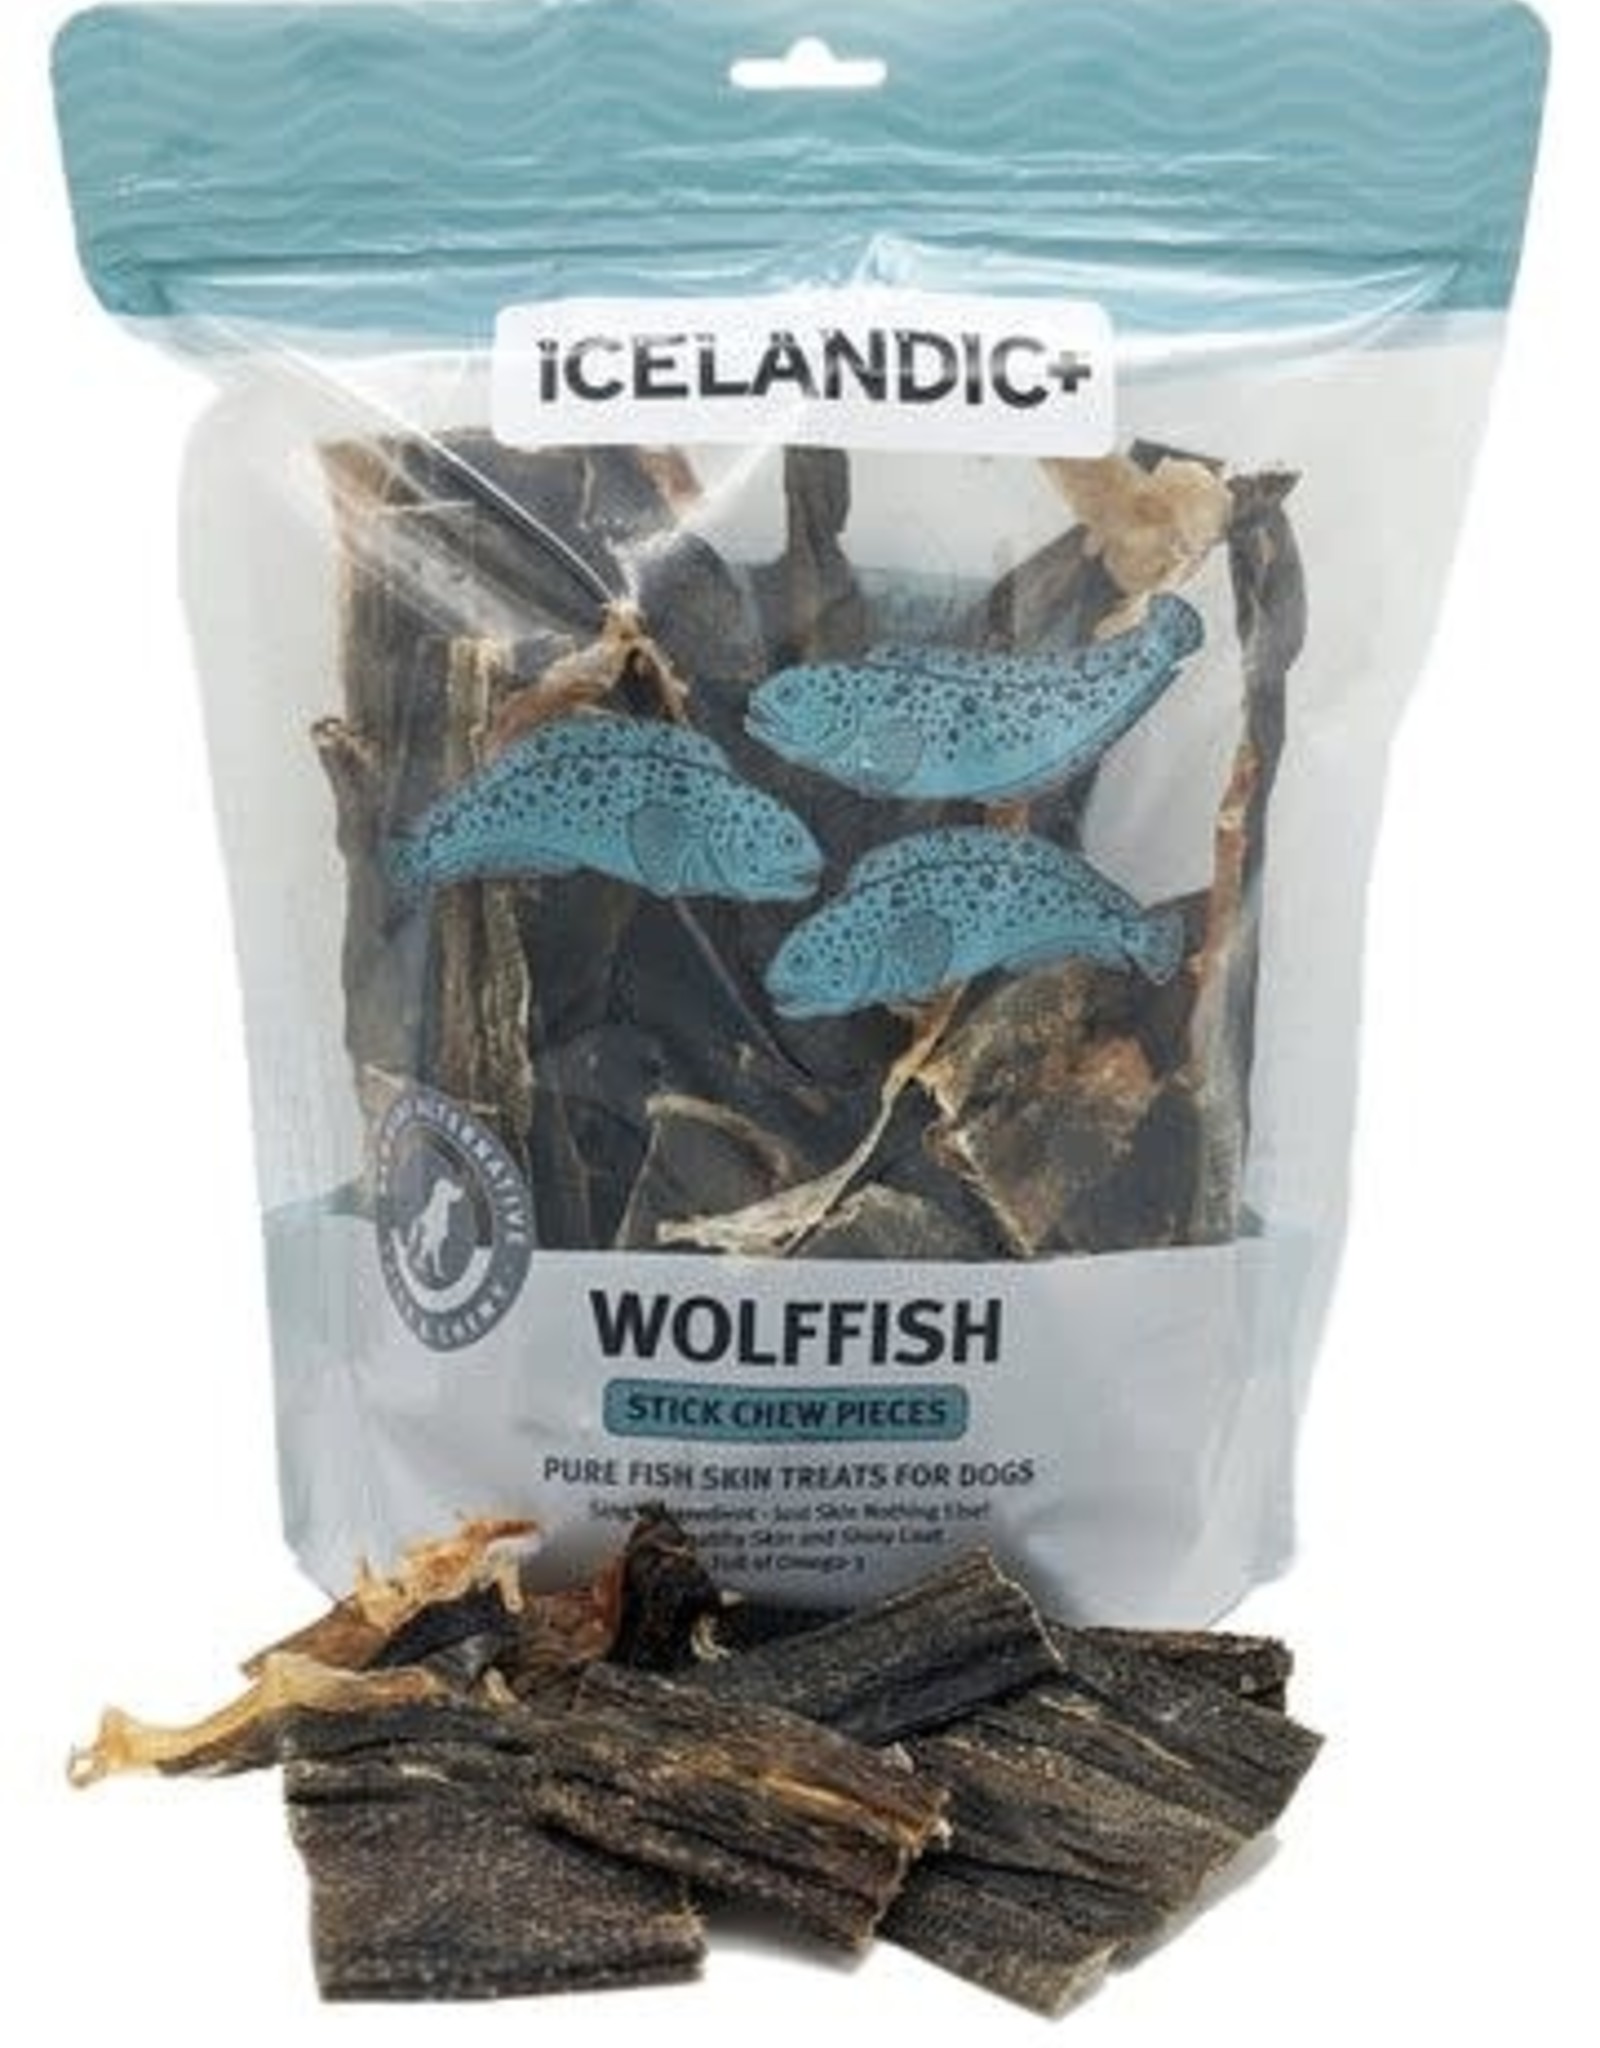 Icelandic+ Icelandic+ Wolffish Chew Sticks